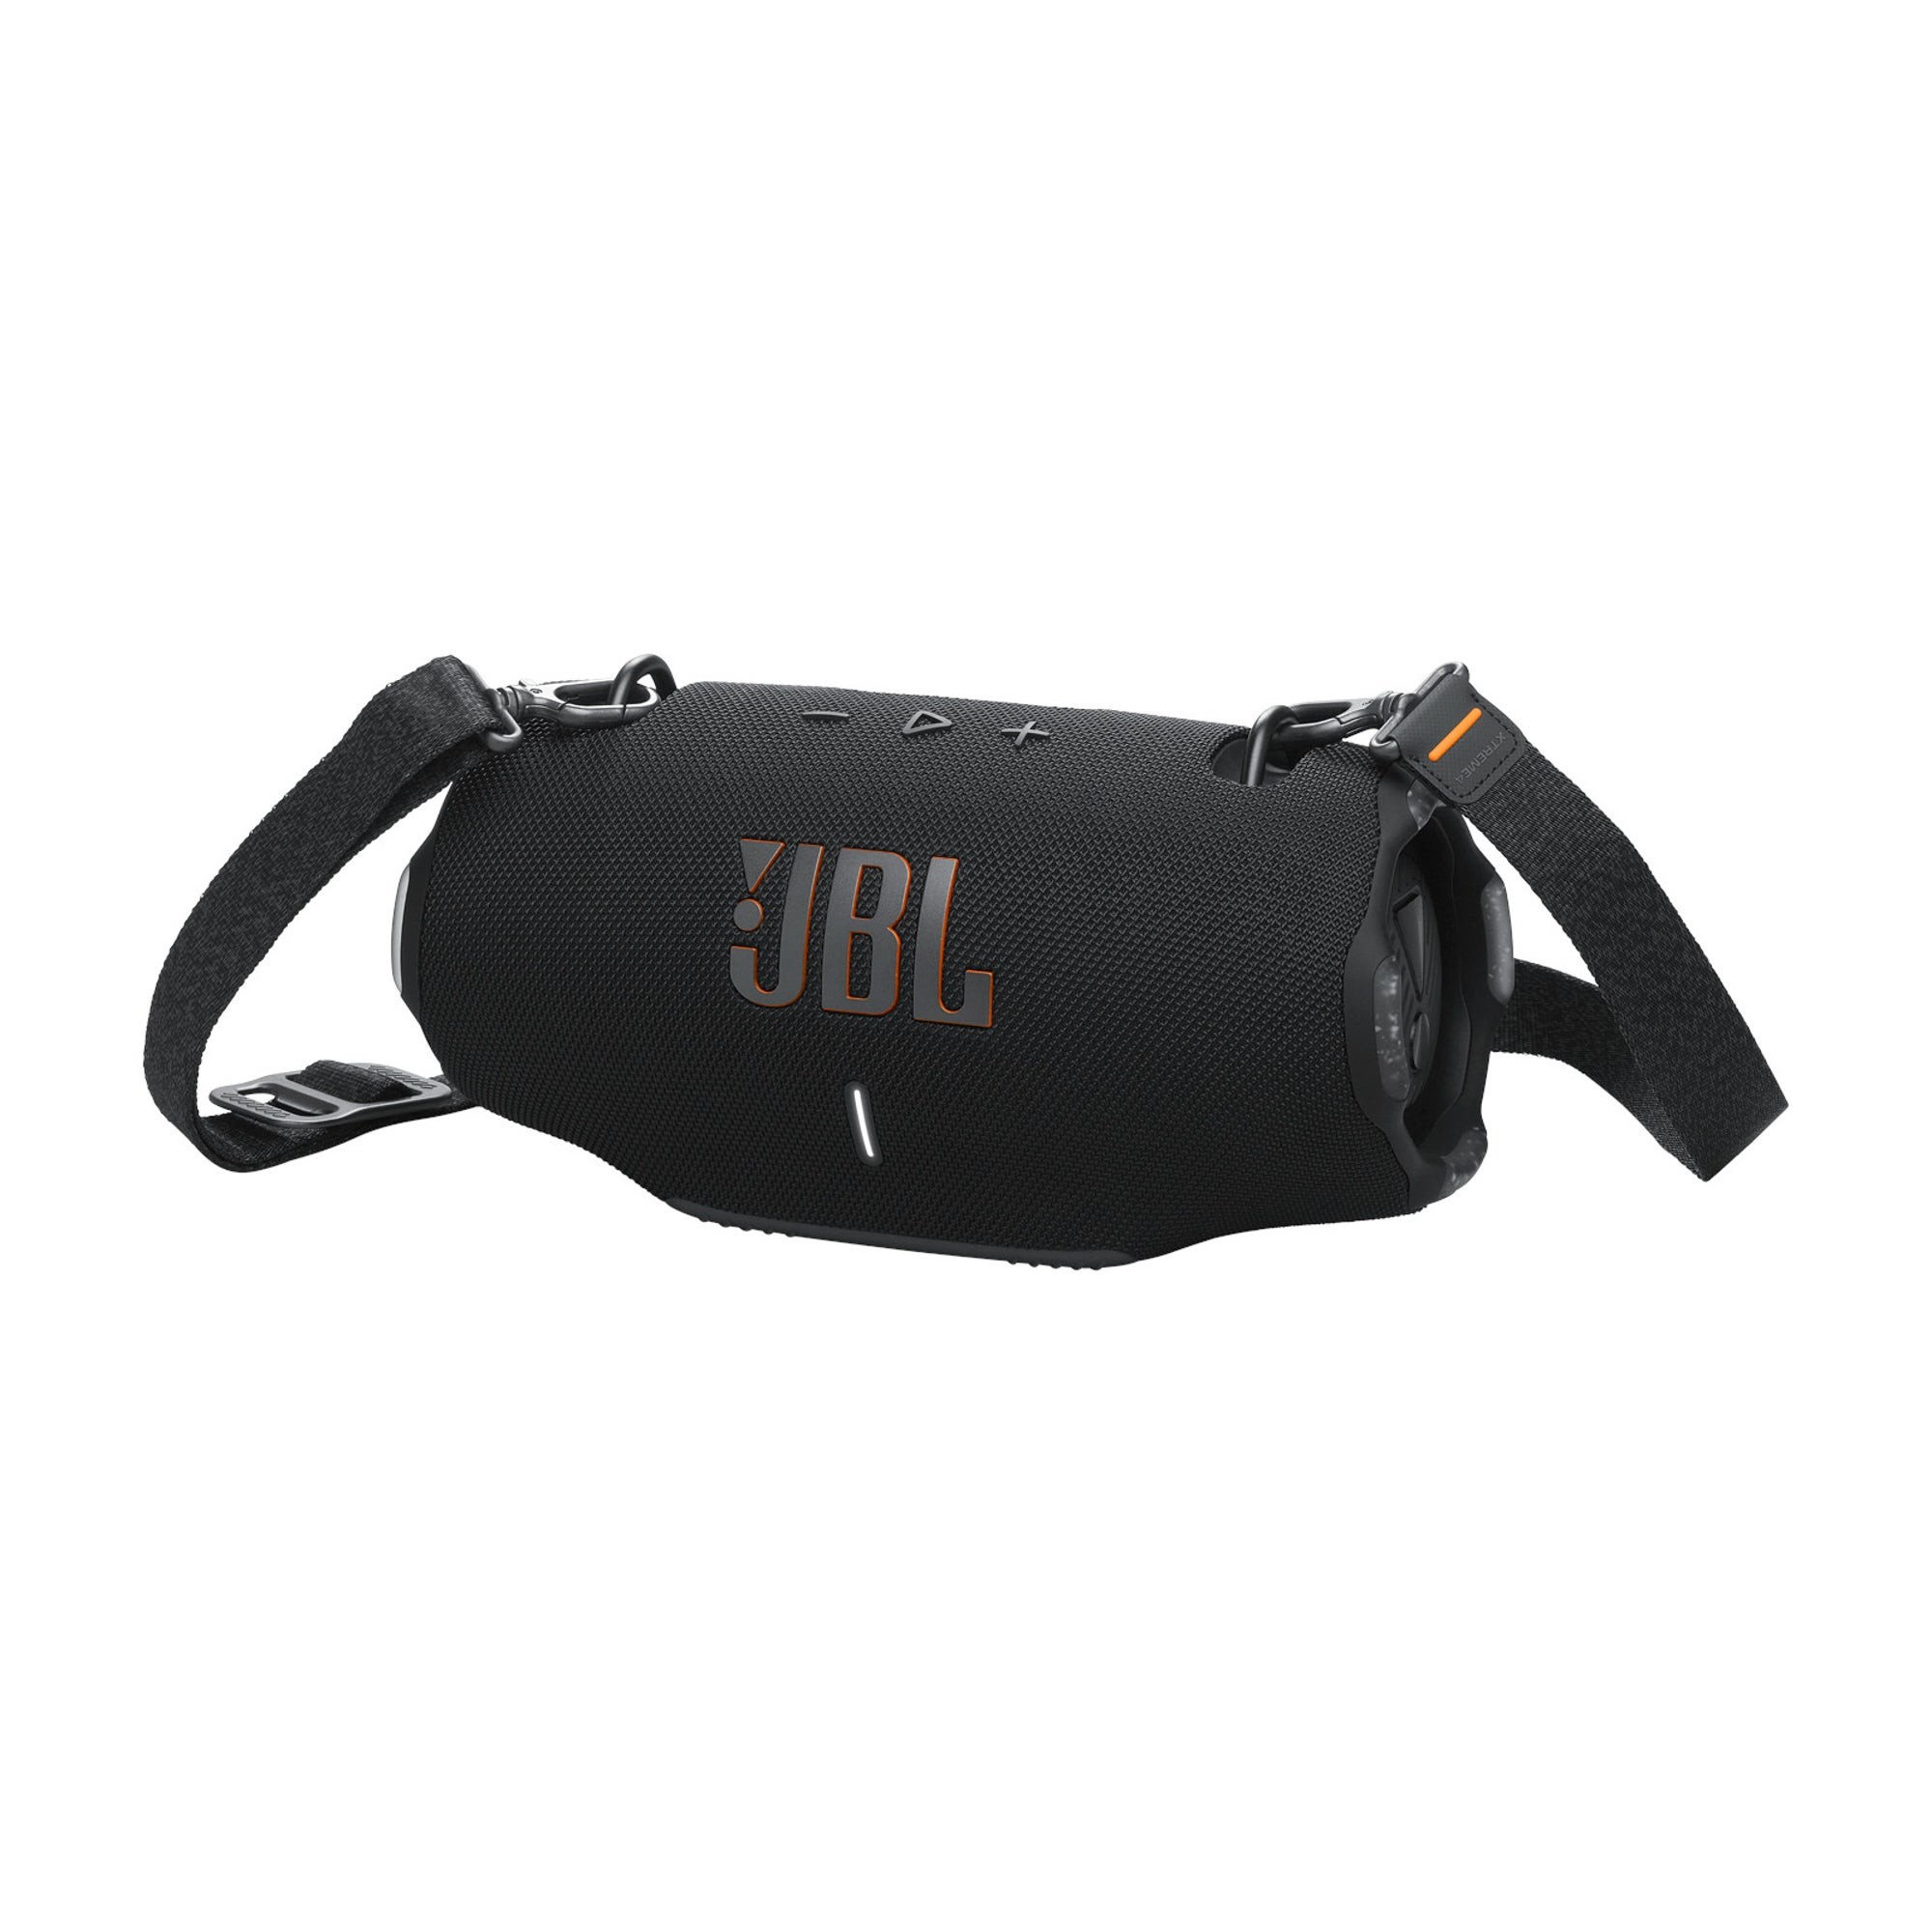 Xtreme 4 Portable Waterproof Speaker w/ Shoulder Strap Black